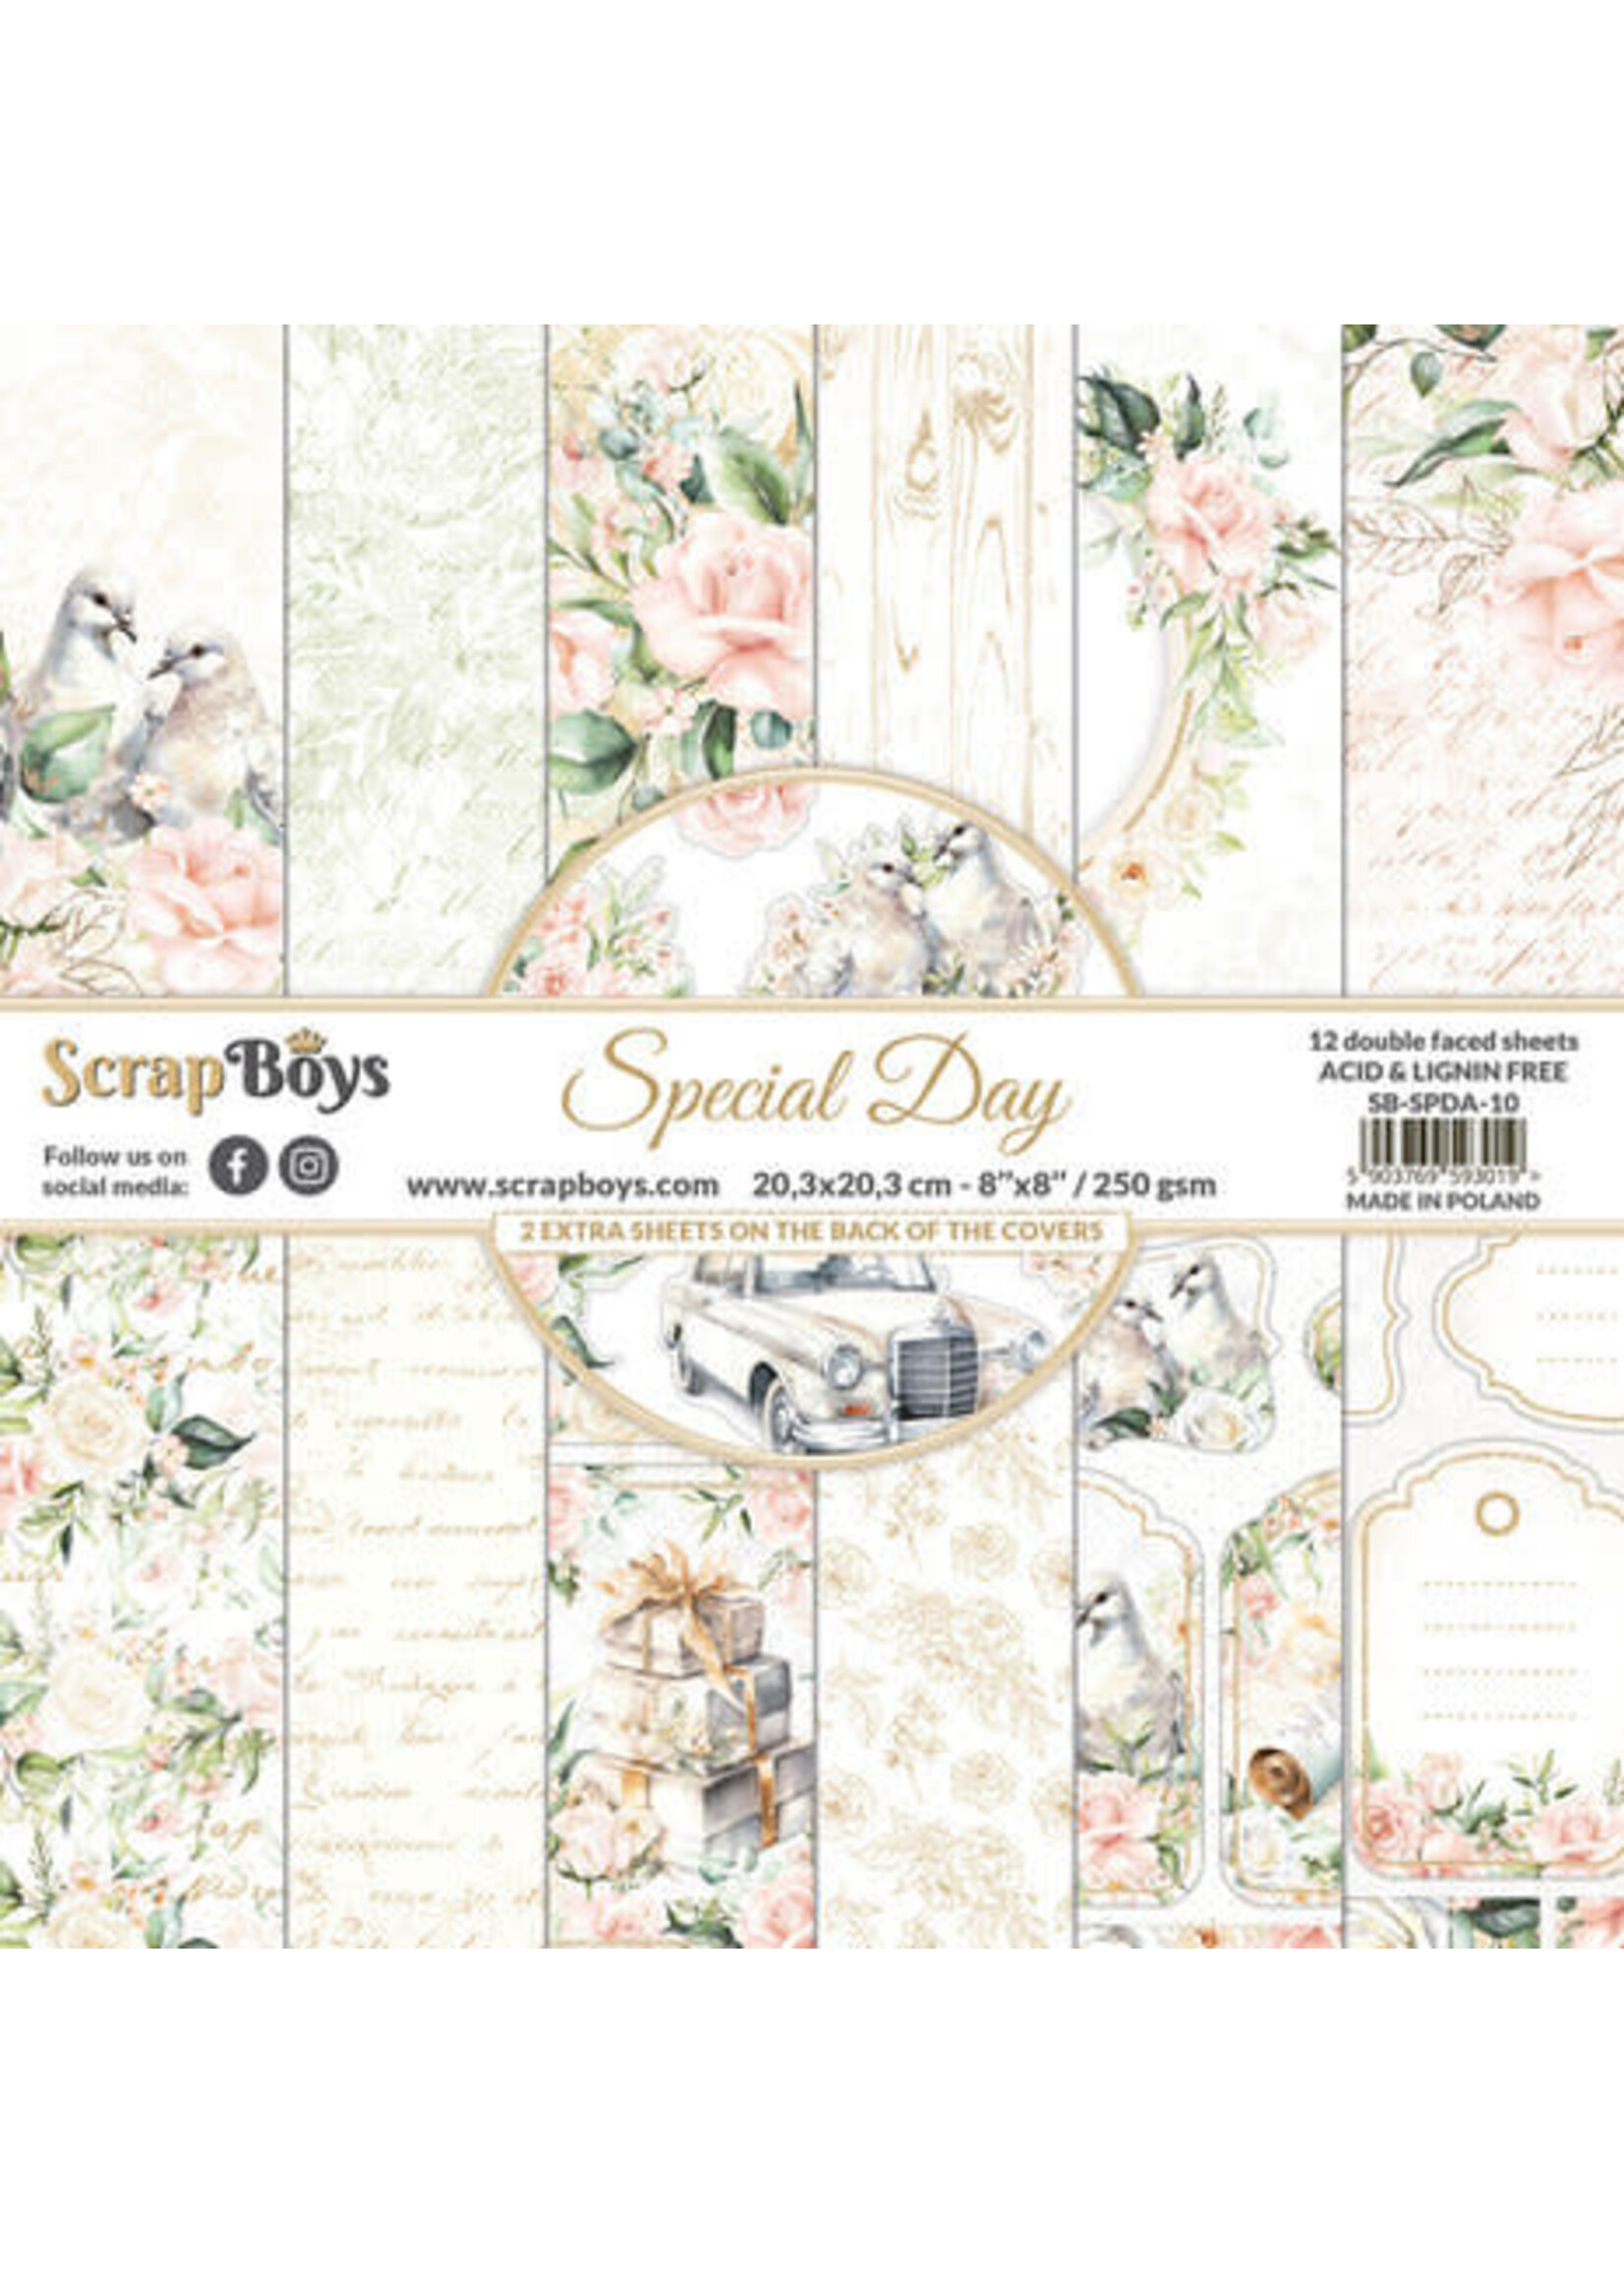 Scrapboys Special Day 8x8 Inch Paper Pad (SB-SPDA-10)